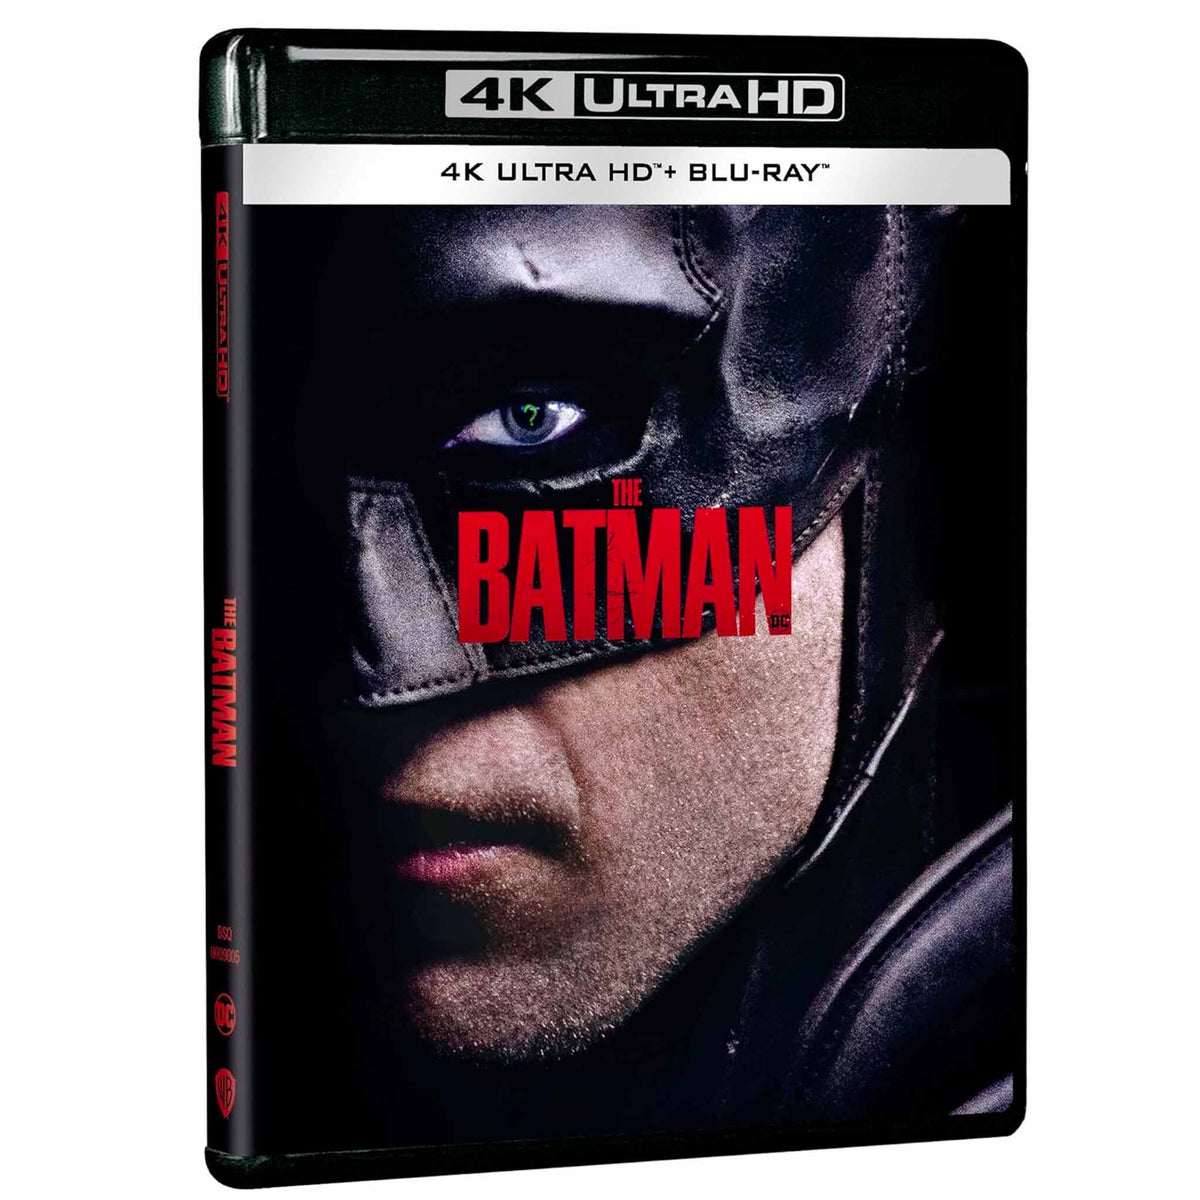 
  
  The Batman 4K UHD + Blu-Ray
  
